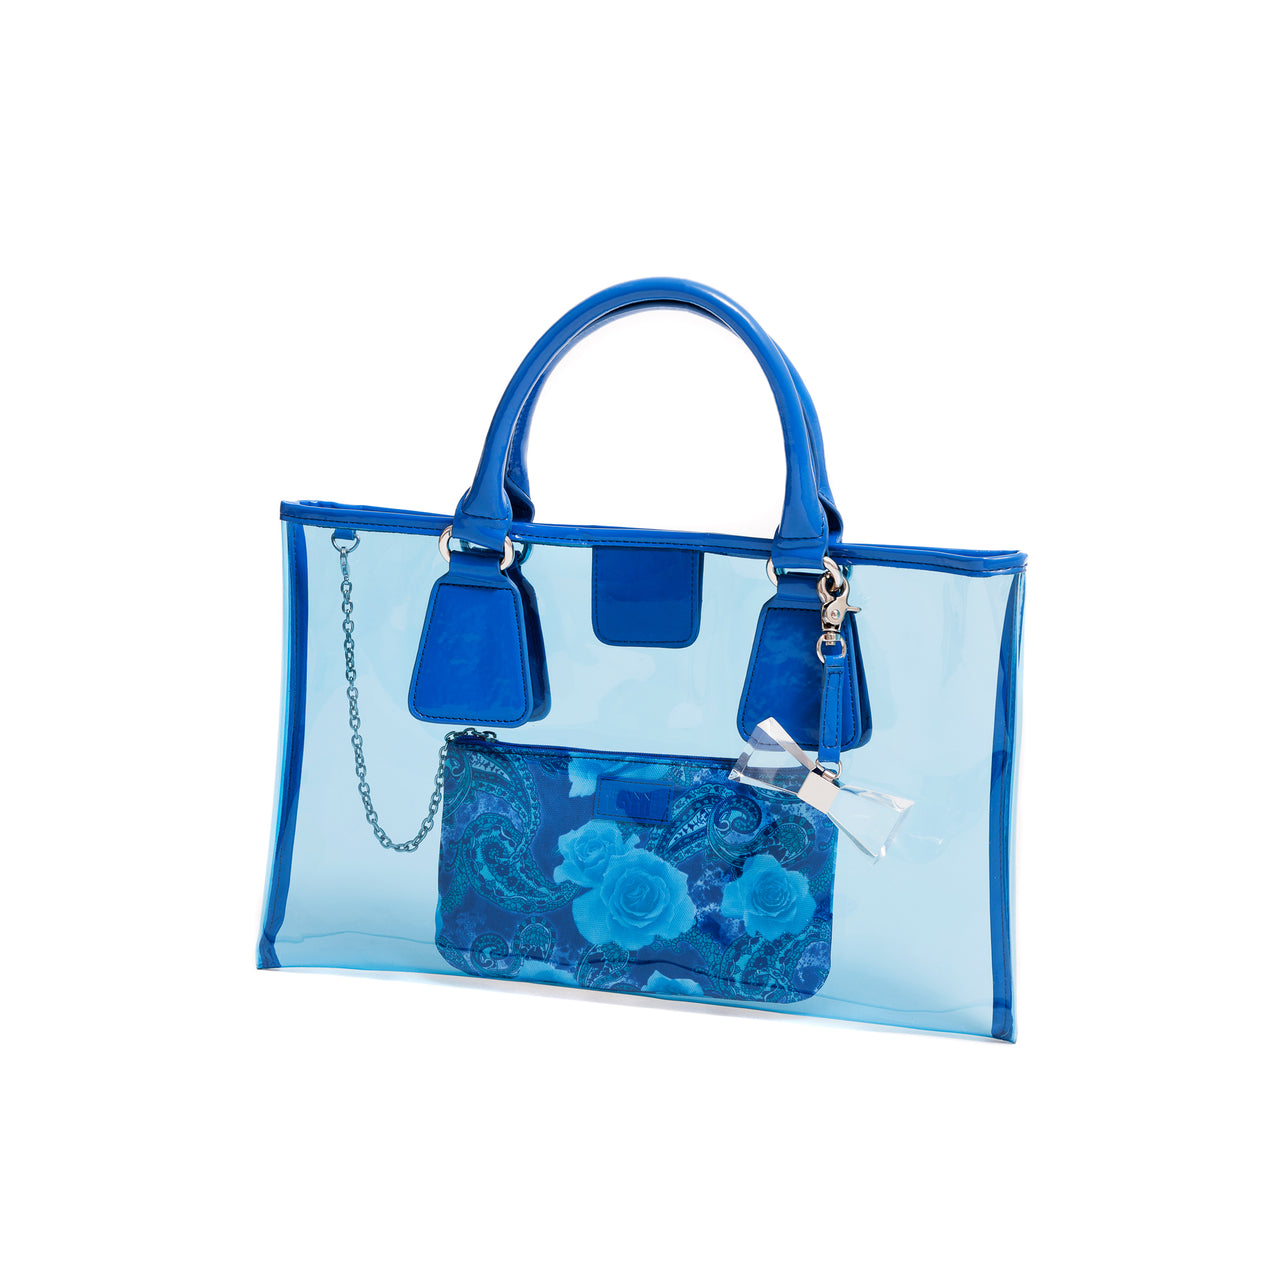 ANNIE Clear Vinyl Handbag - Jeanne Lottie Handbags Canada